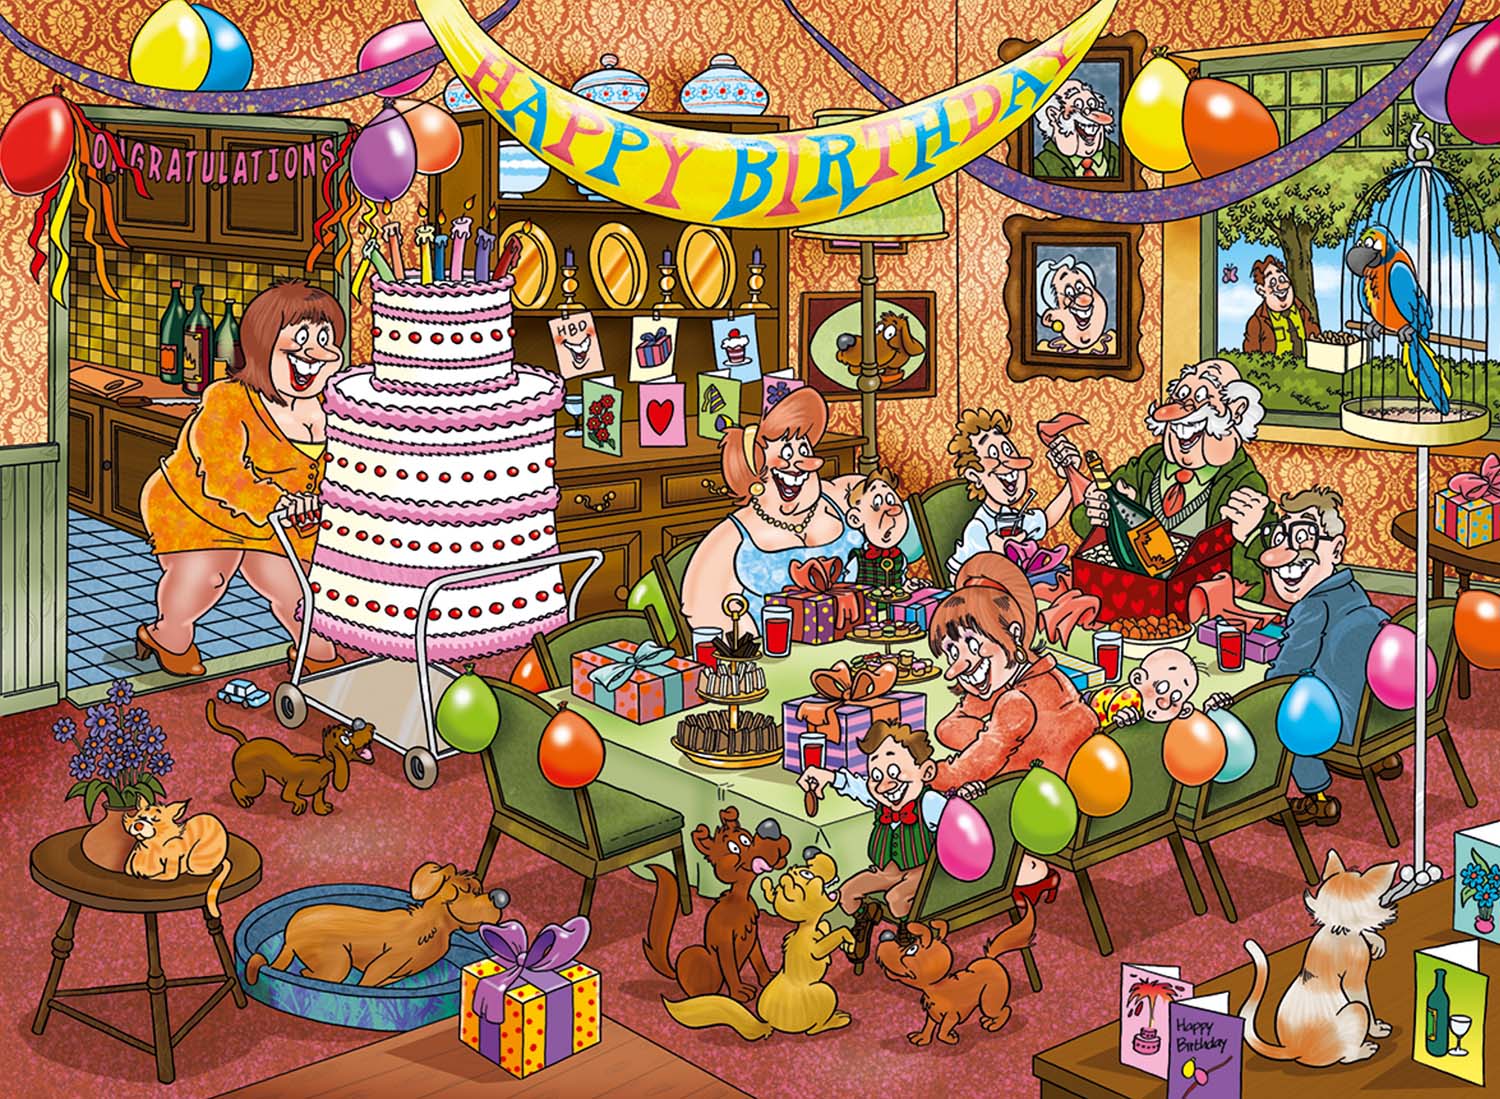 Wasgij Mystery 16: Birthday Surprise! Humor Jigsaw Puzzle